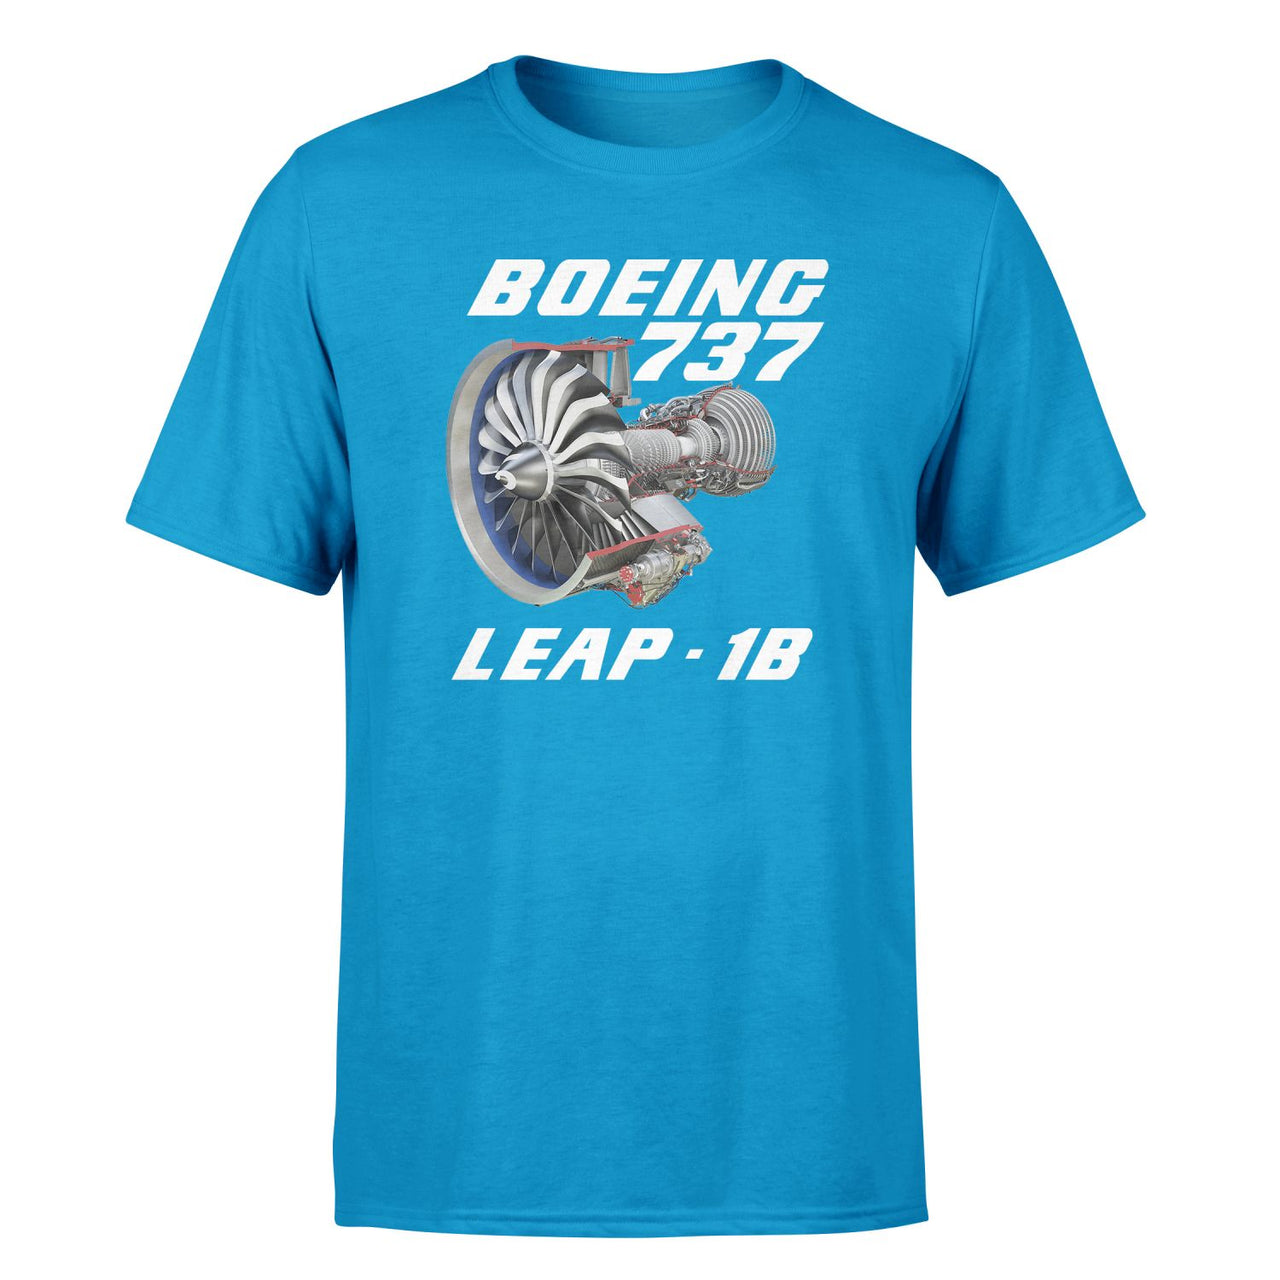 Boeing 737 & Leap 1B Designed T-Shirts